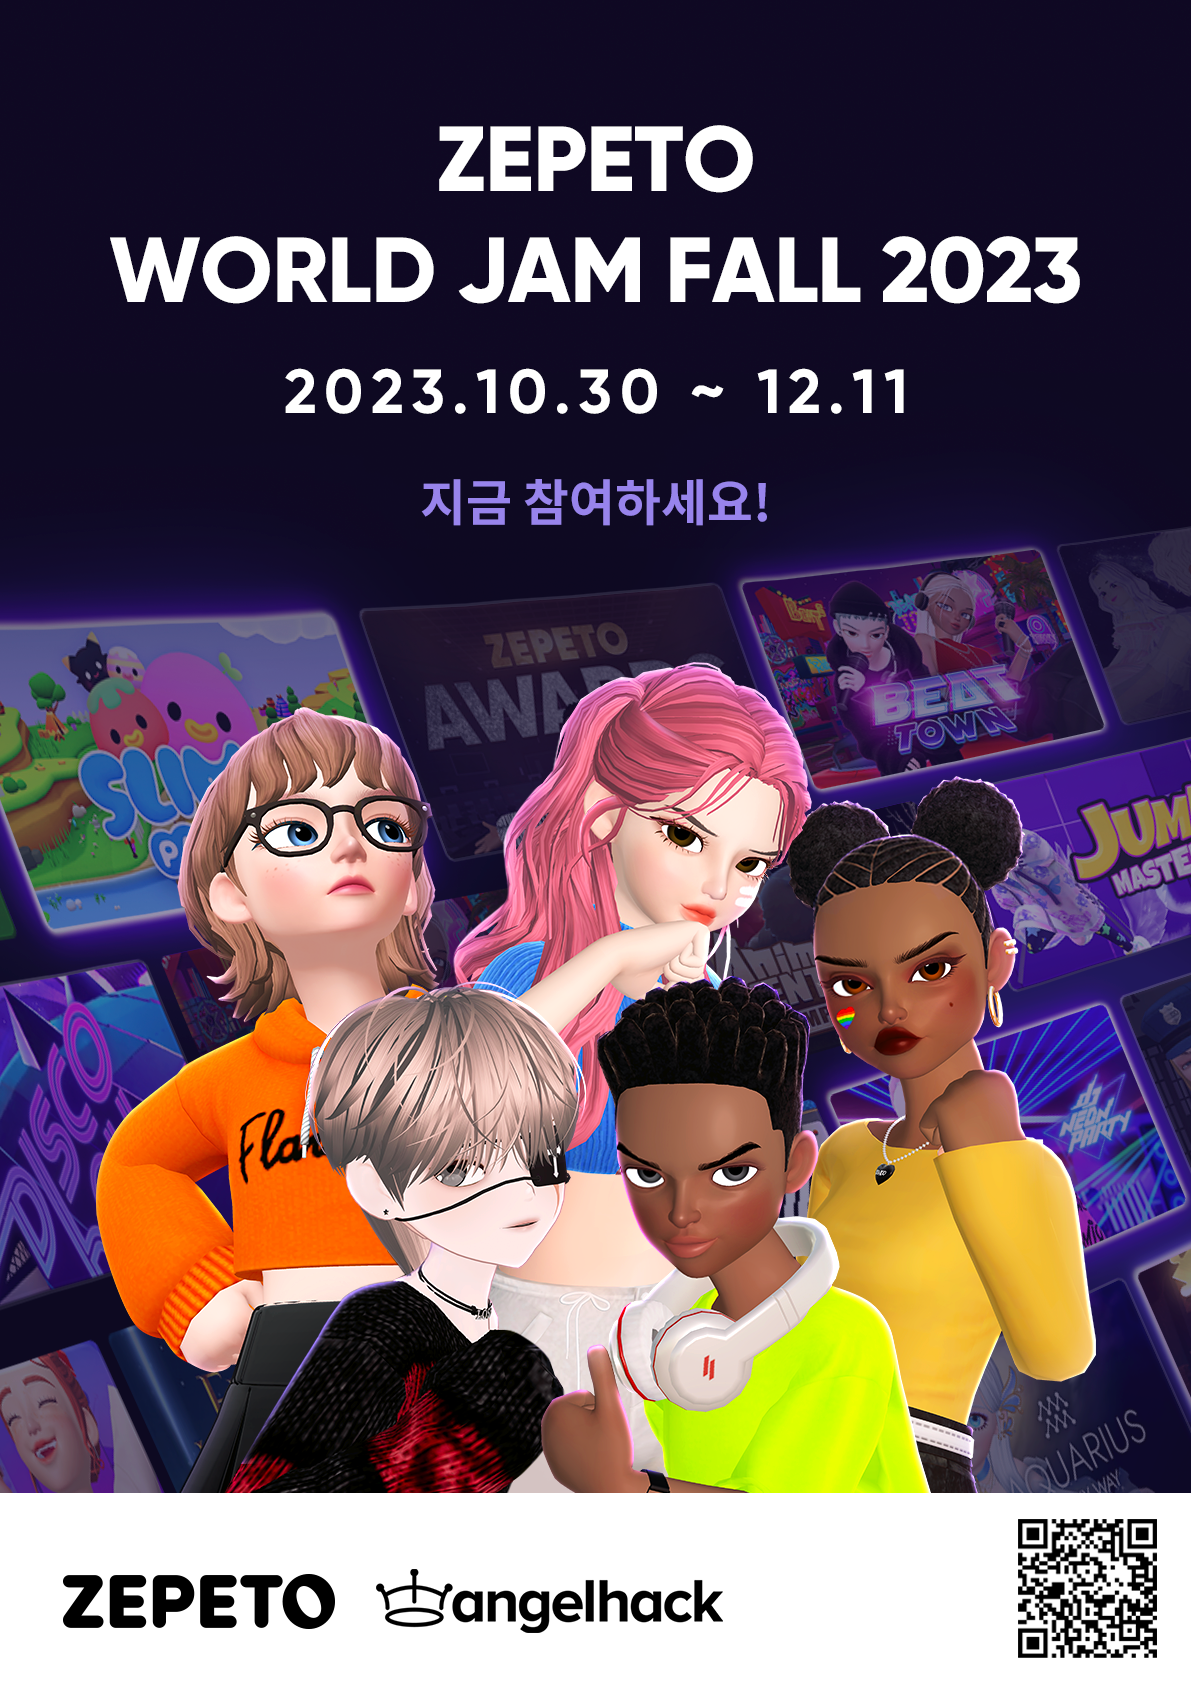 ZEPETO World Jam Fall 2023